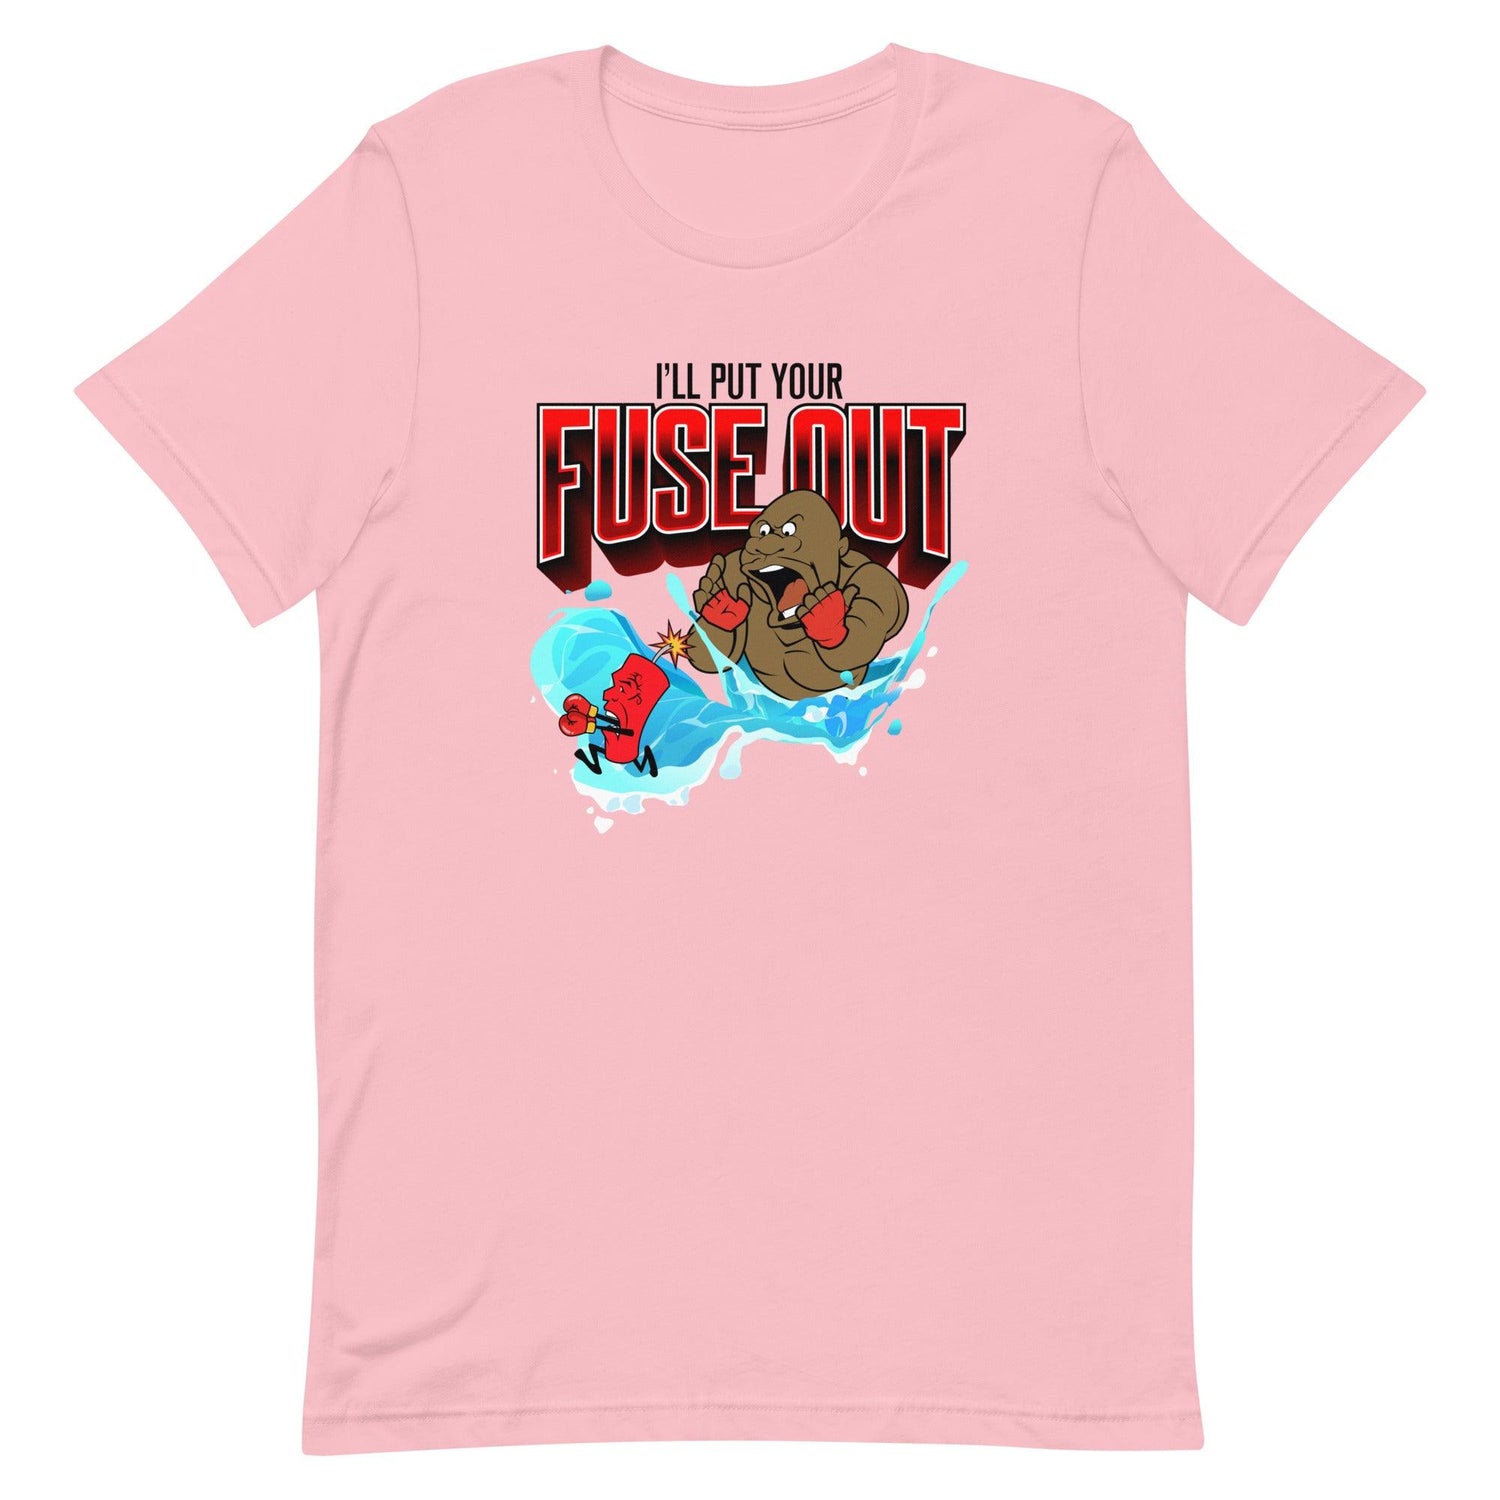 Bob Sapp “FUSE OUT” t-shirt - Fan Arch